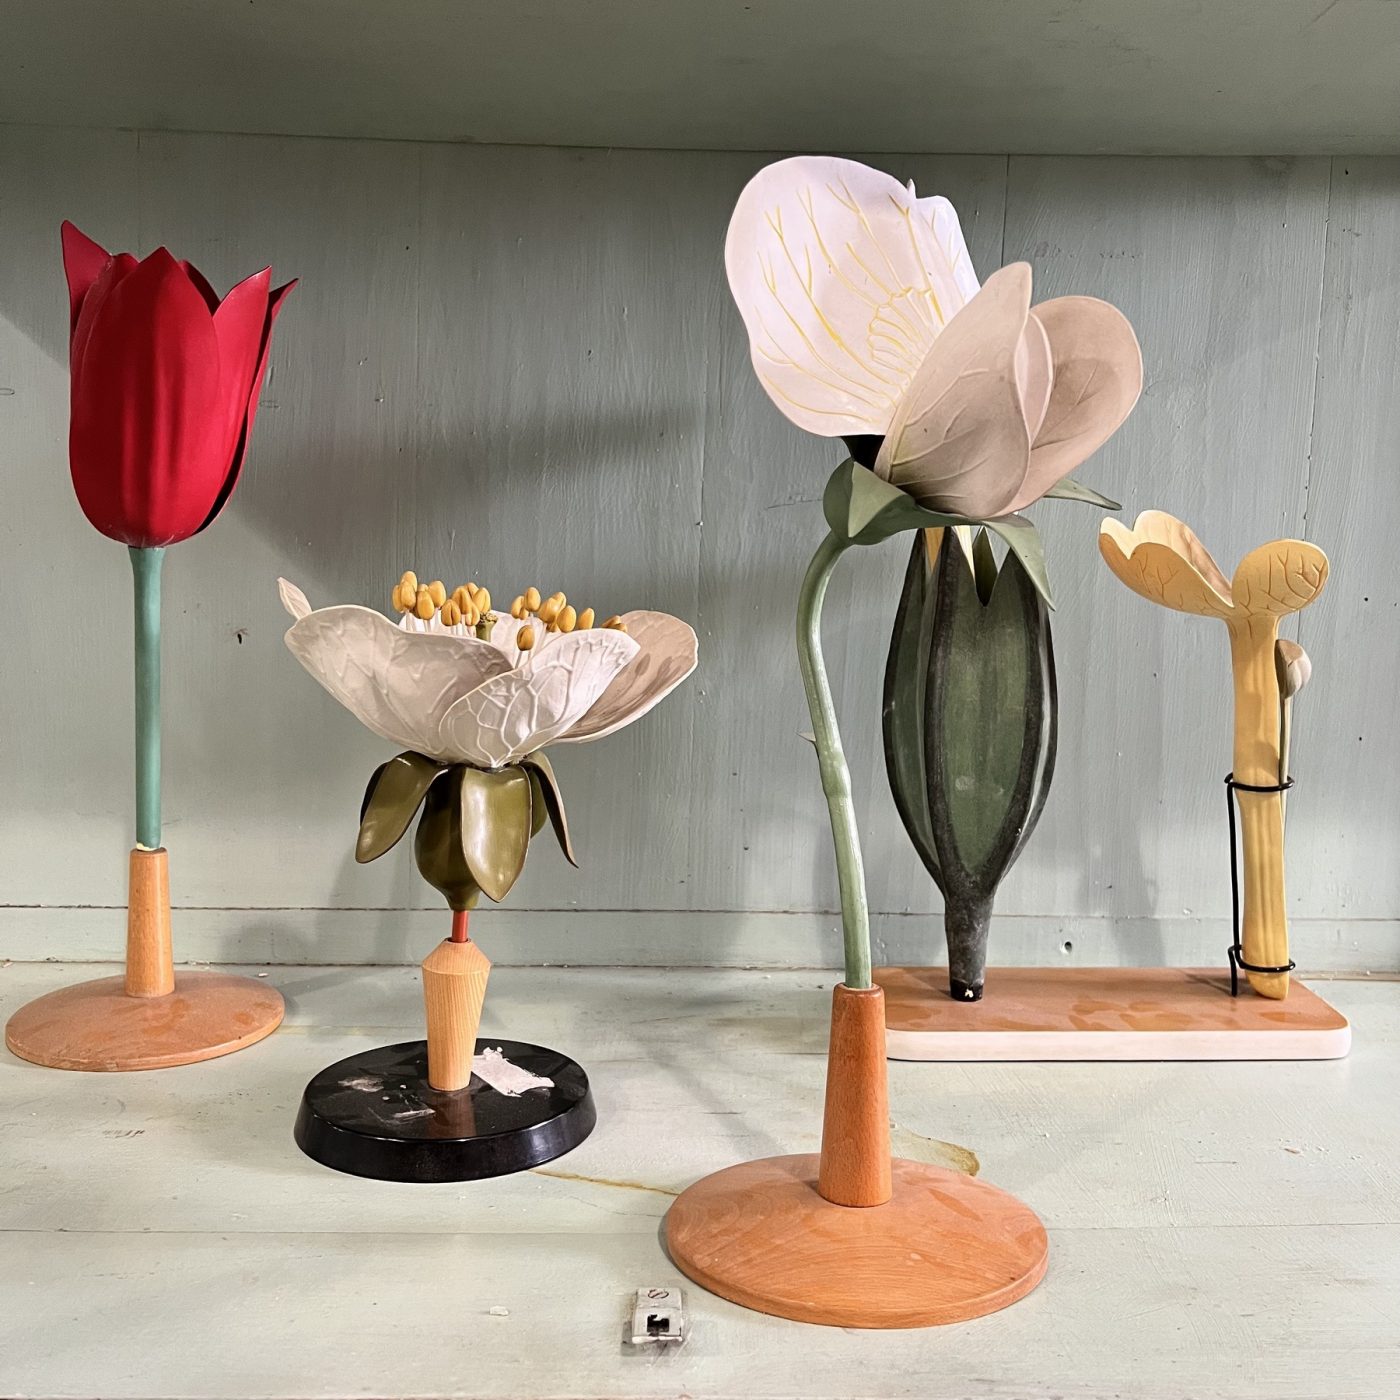 objet-vagabond-didactic-flowers0008